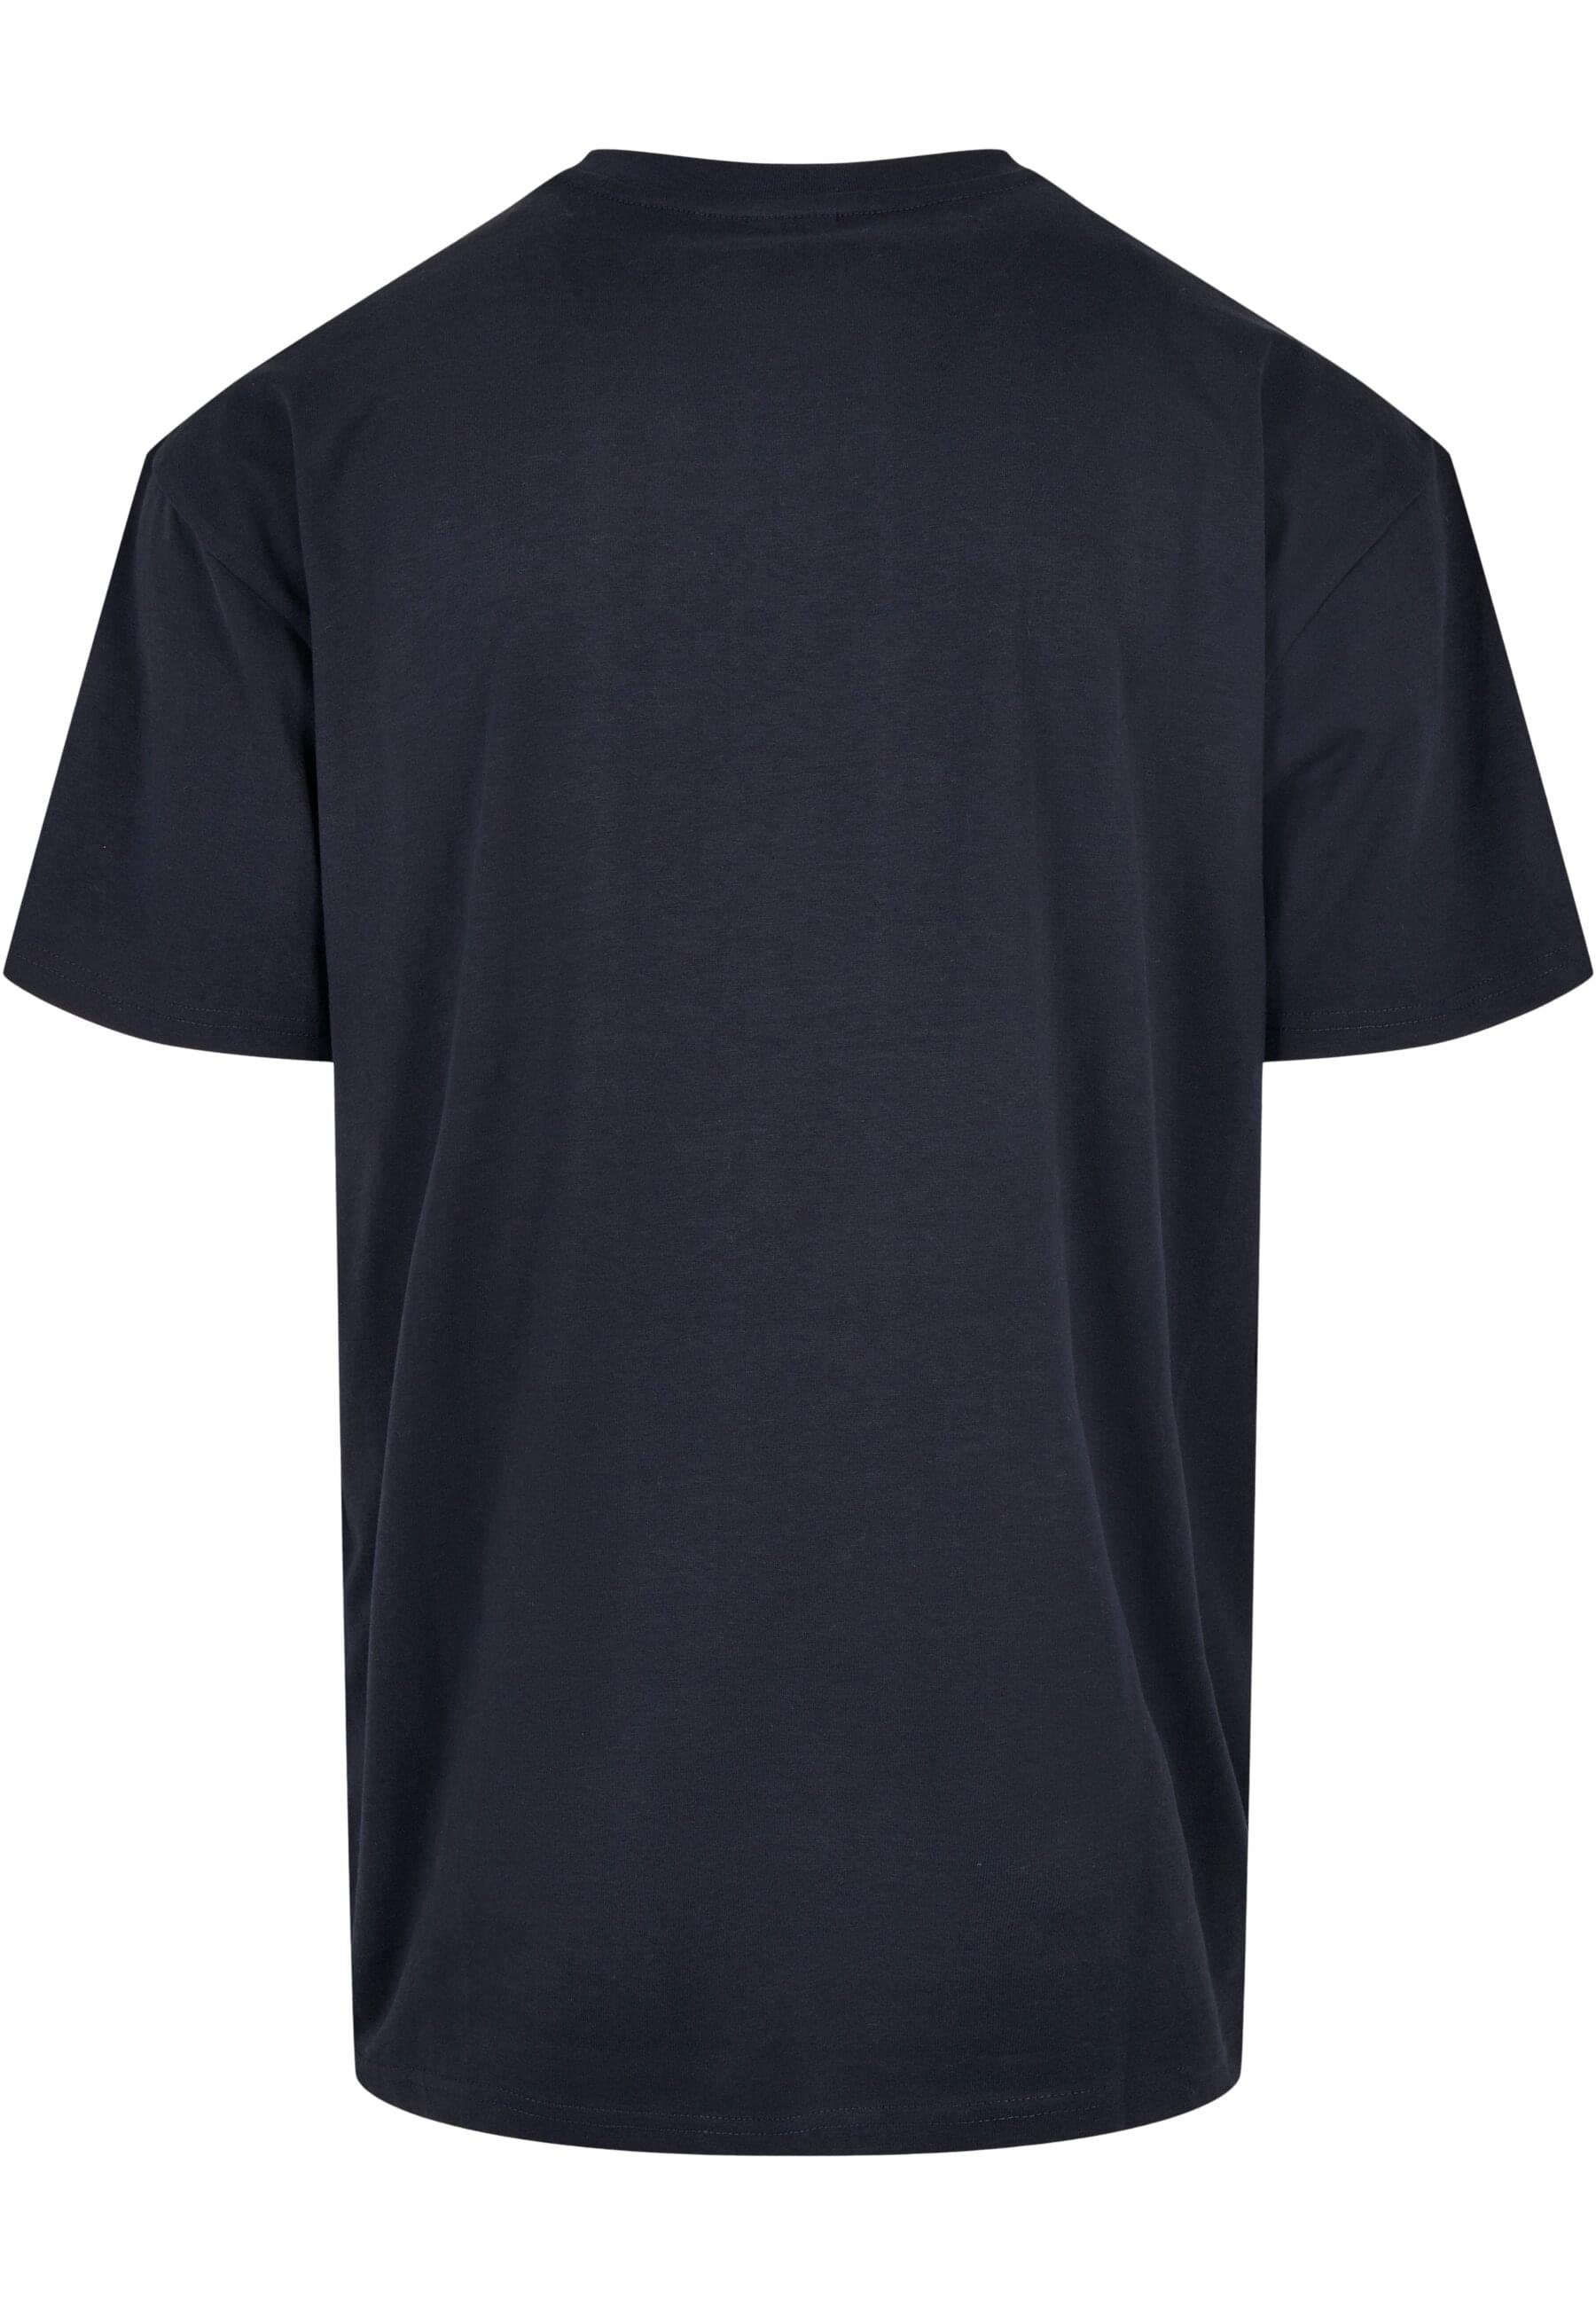 URBAN CLASSICS T-Shirt Herren Heavy midnightnavy+lavender Tee 2-Pack (1-tlg) Ovesized